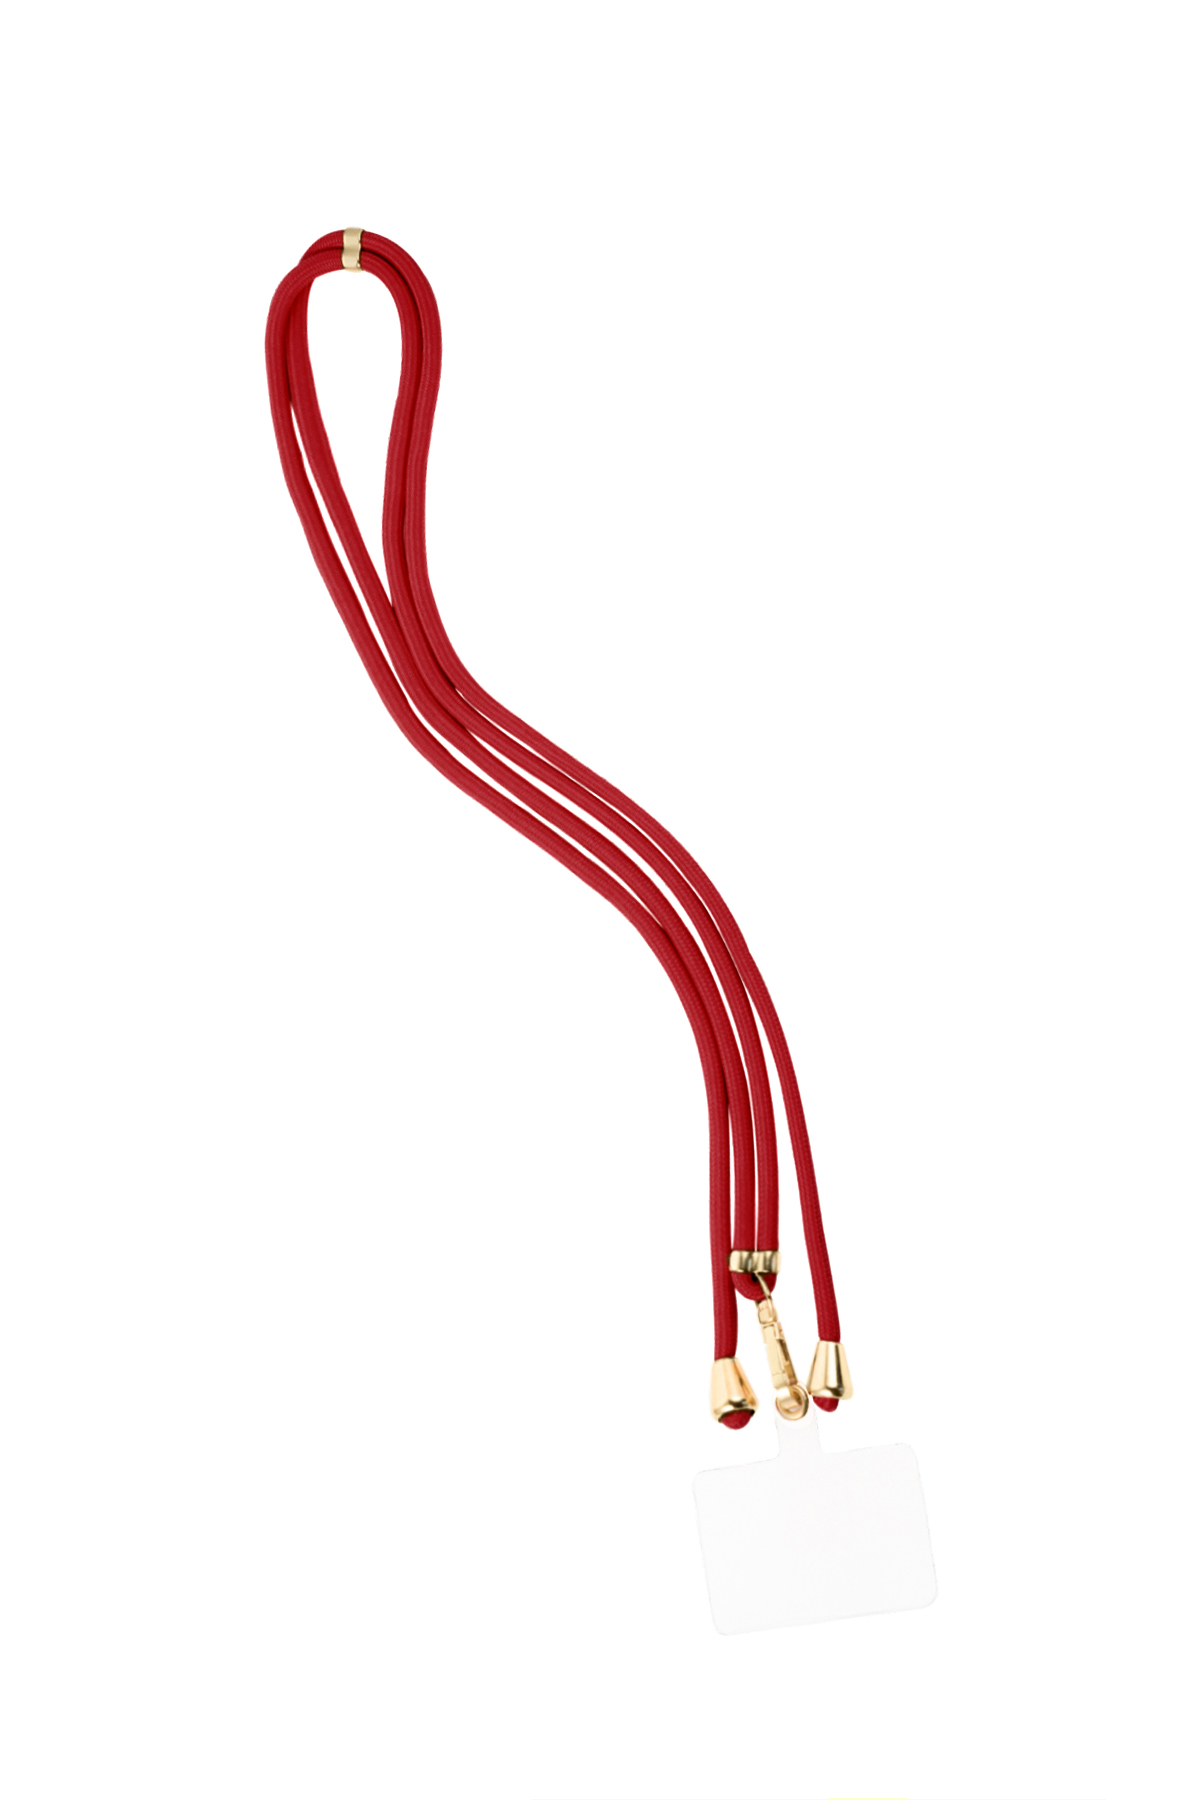 Telephone cord subtle print - wine red h5 